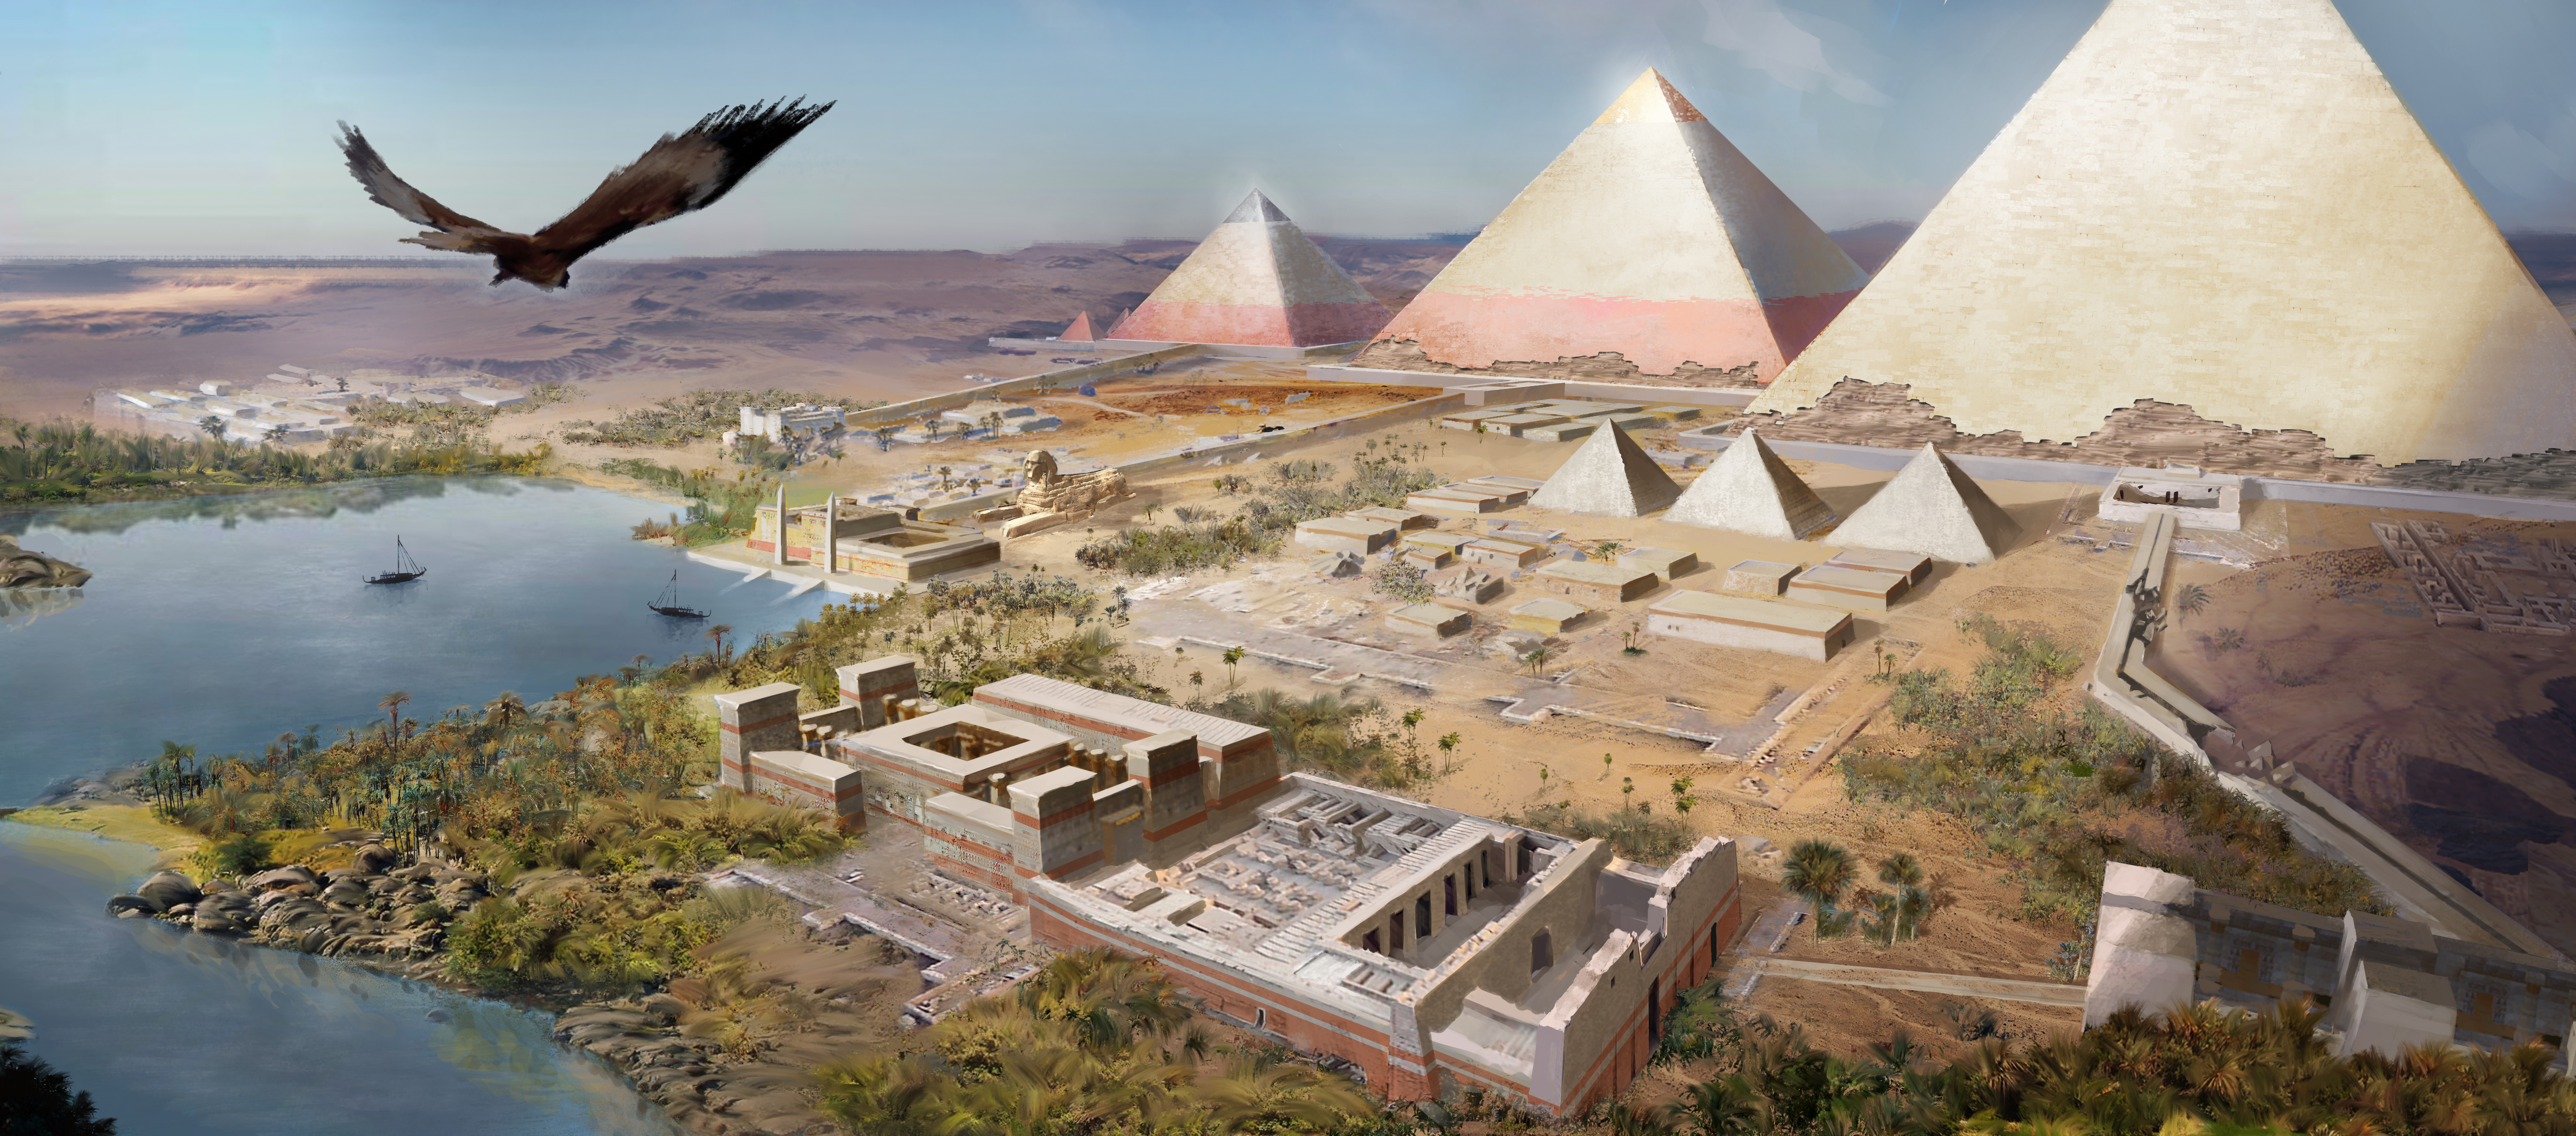 General 5479x2416 Assassin's Creed: Origins video games artwork Assassin's Creed Egypt landscape Pyramids of Giza eagle Ubisoft PC gaming pyramid digital art